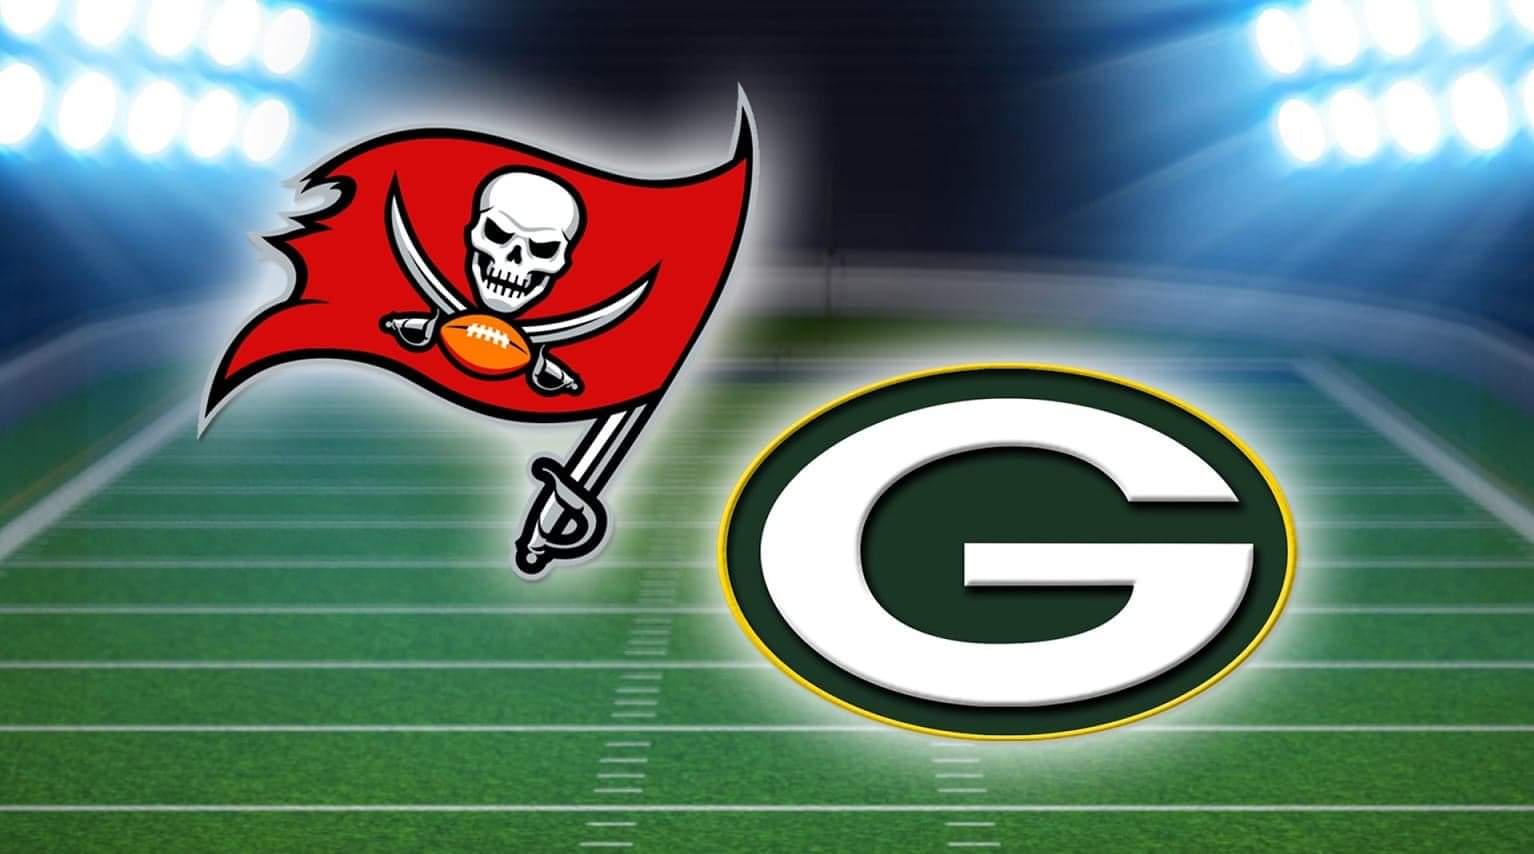 Green Bay Packers vs Tampa Bay Buccaneers - September 25, 2022